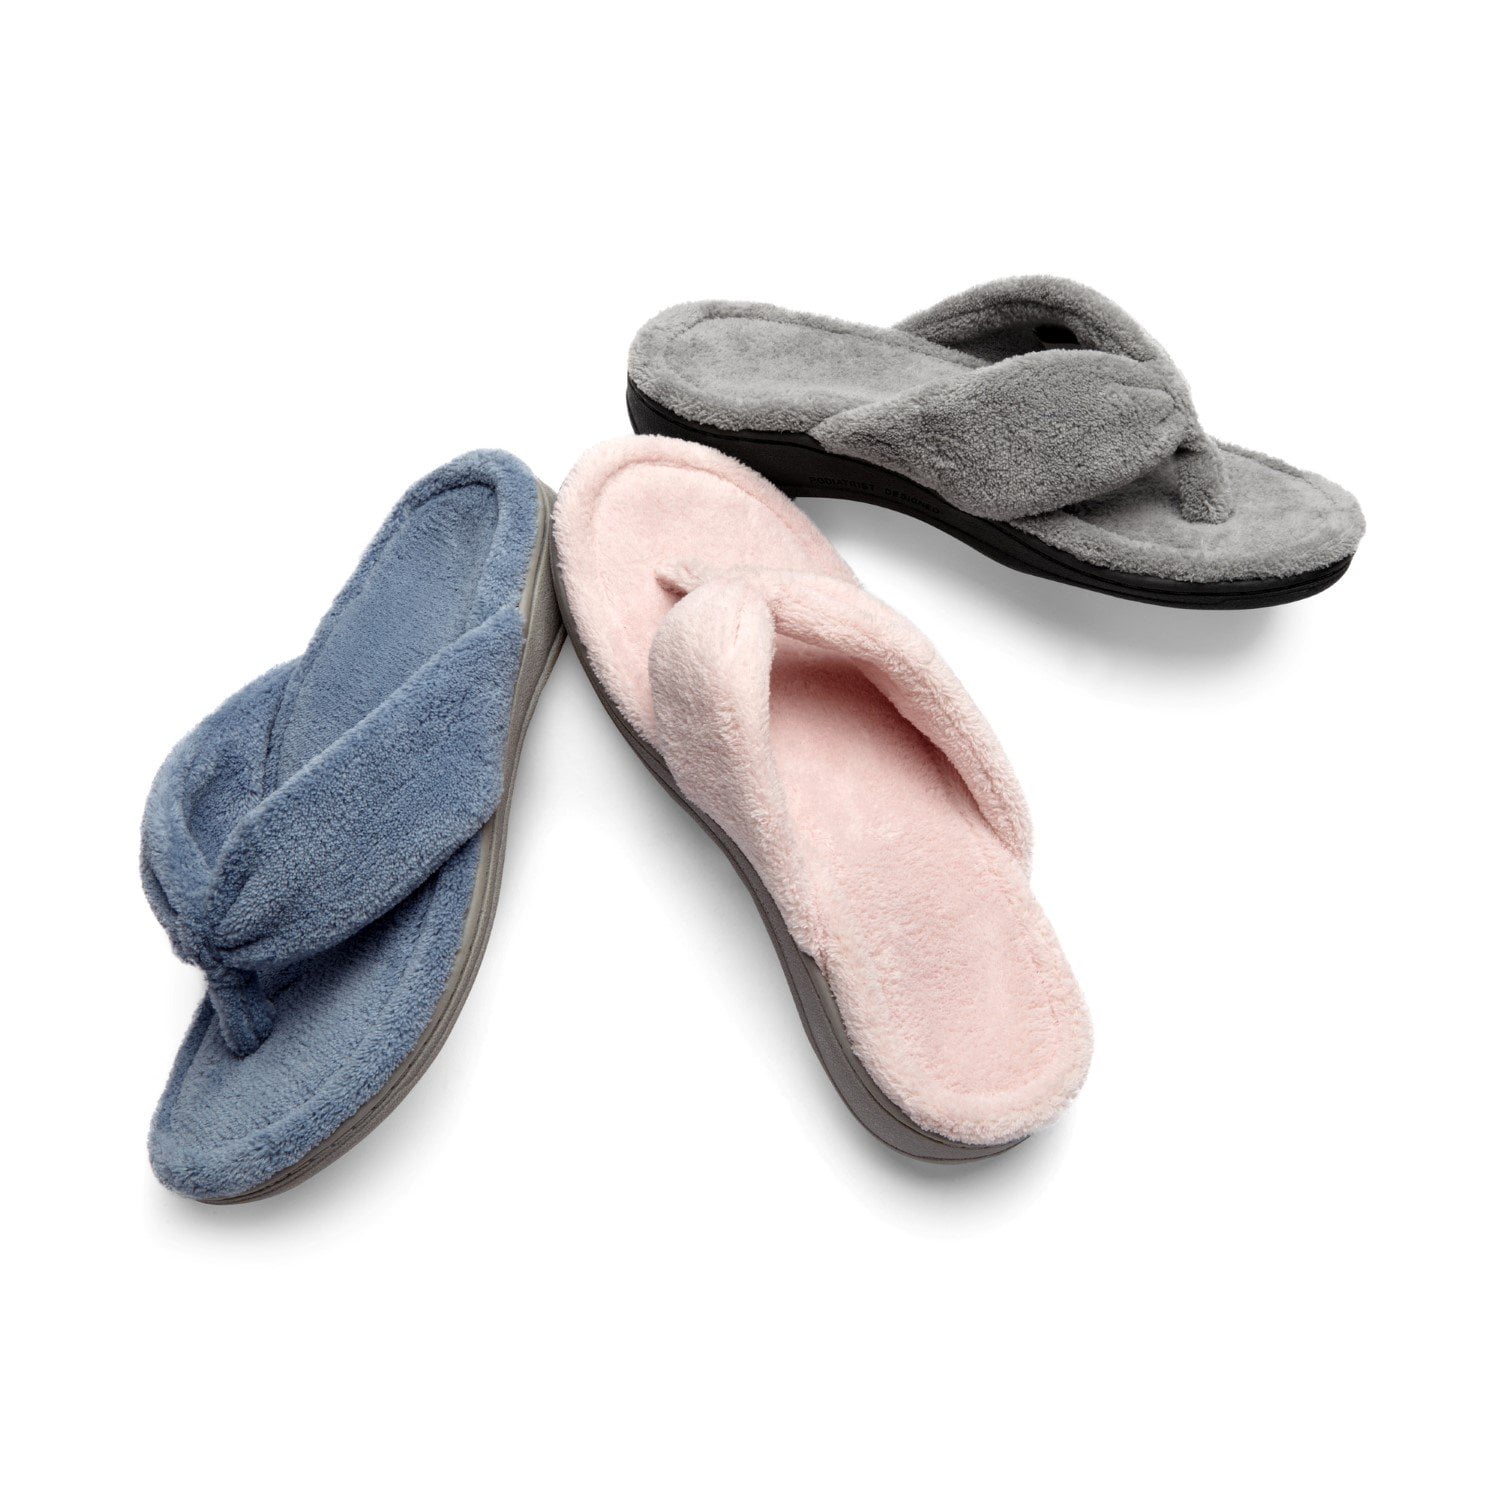 vionic women's indulge gracie slipper